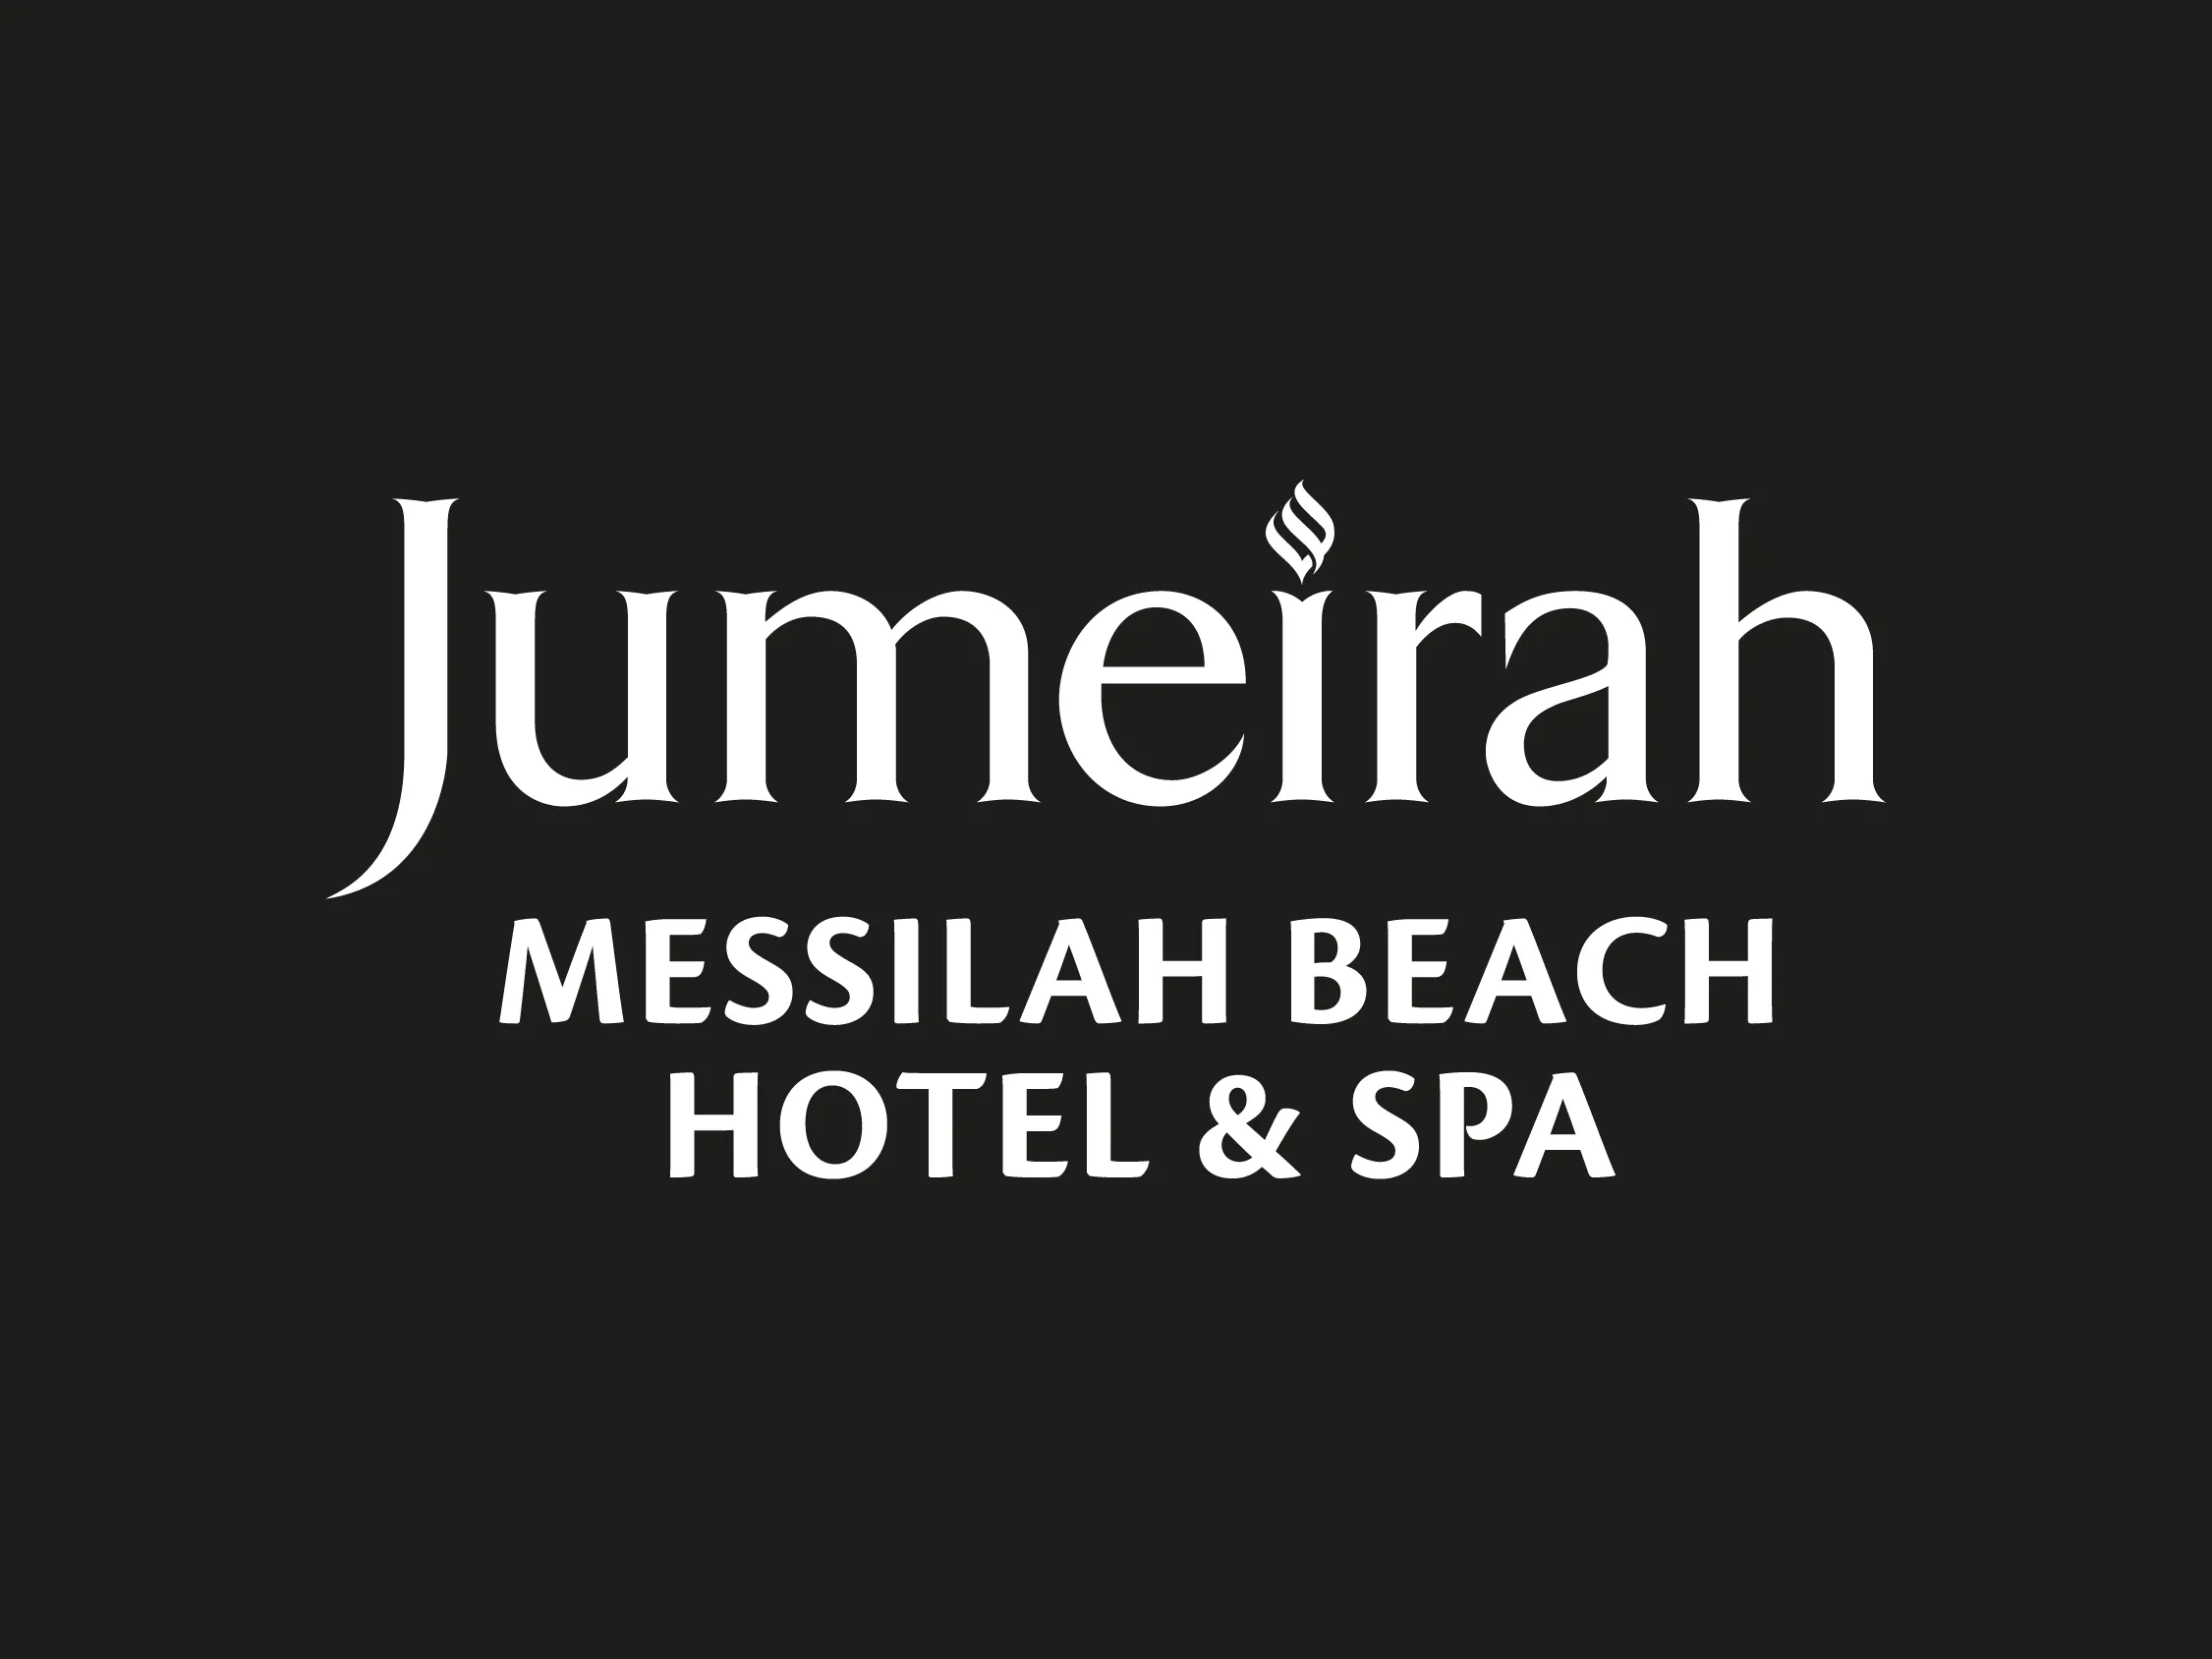 Dazzah Merchants logos-Jumeirah